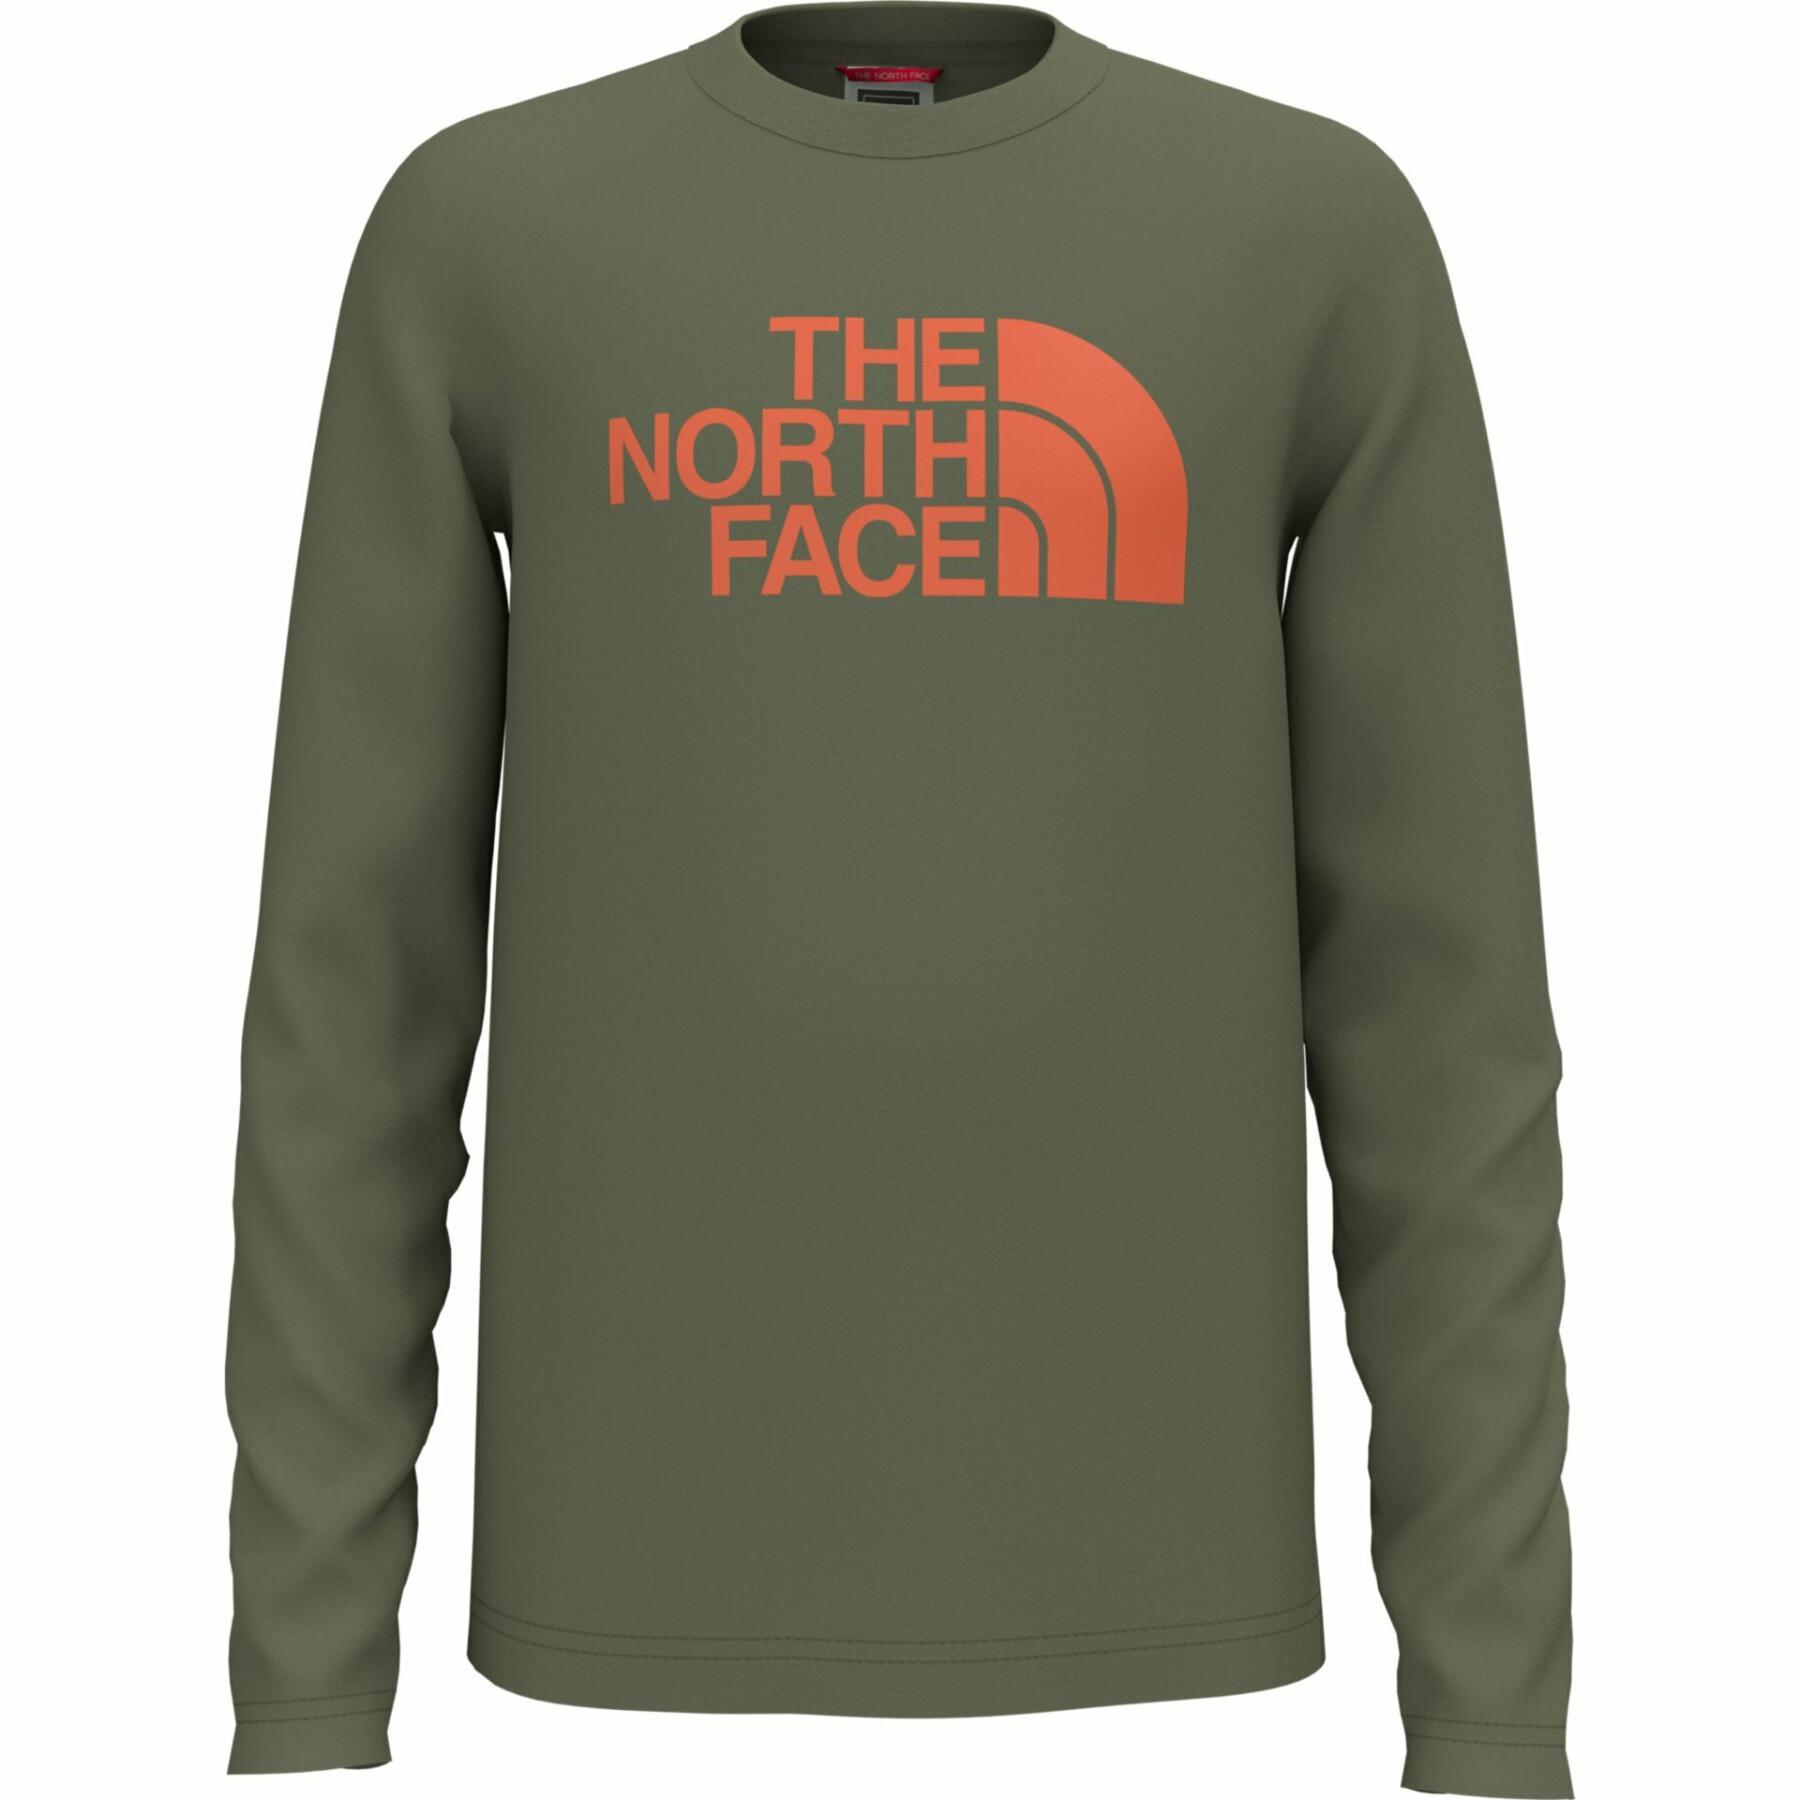 Camiseta mangas largas niños The North Face Easy